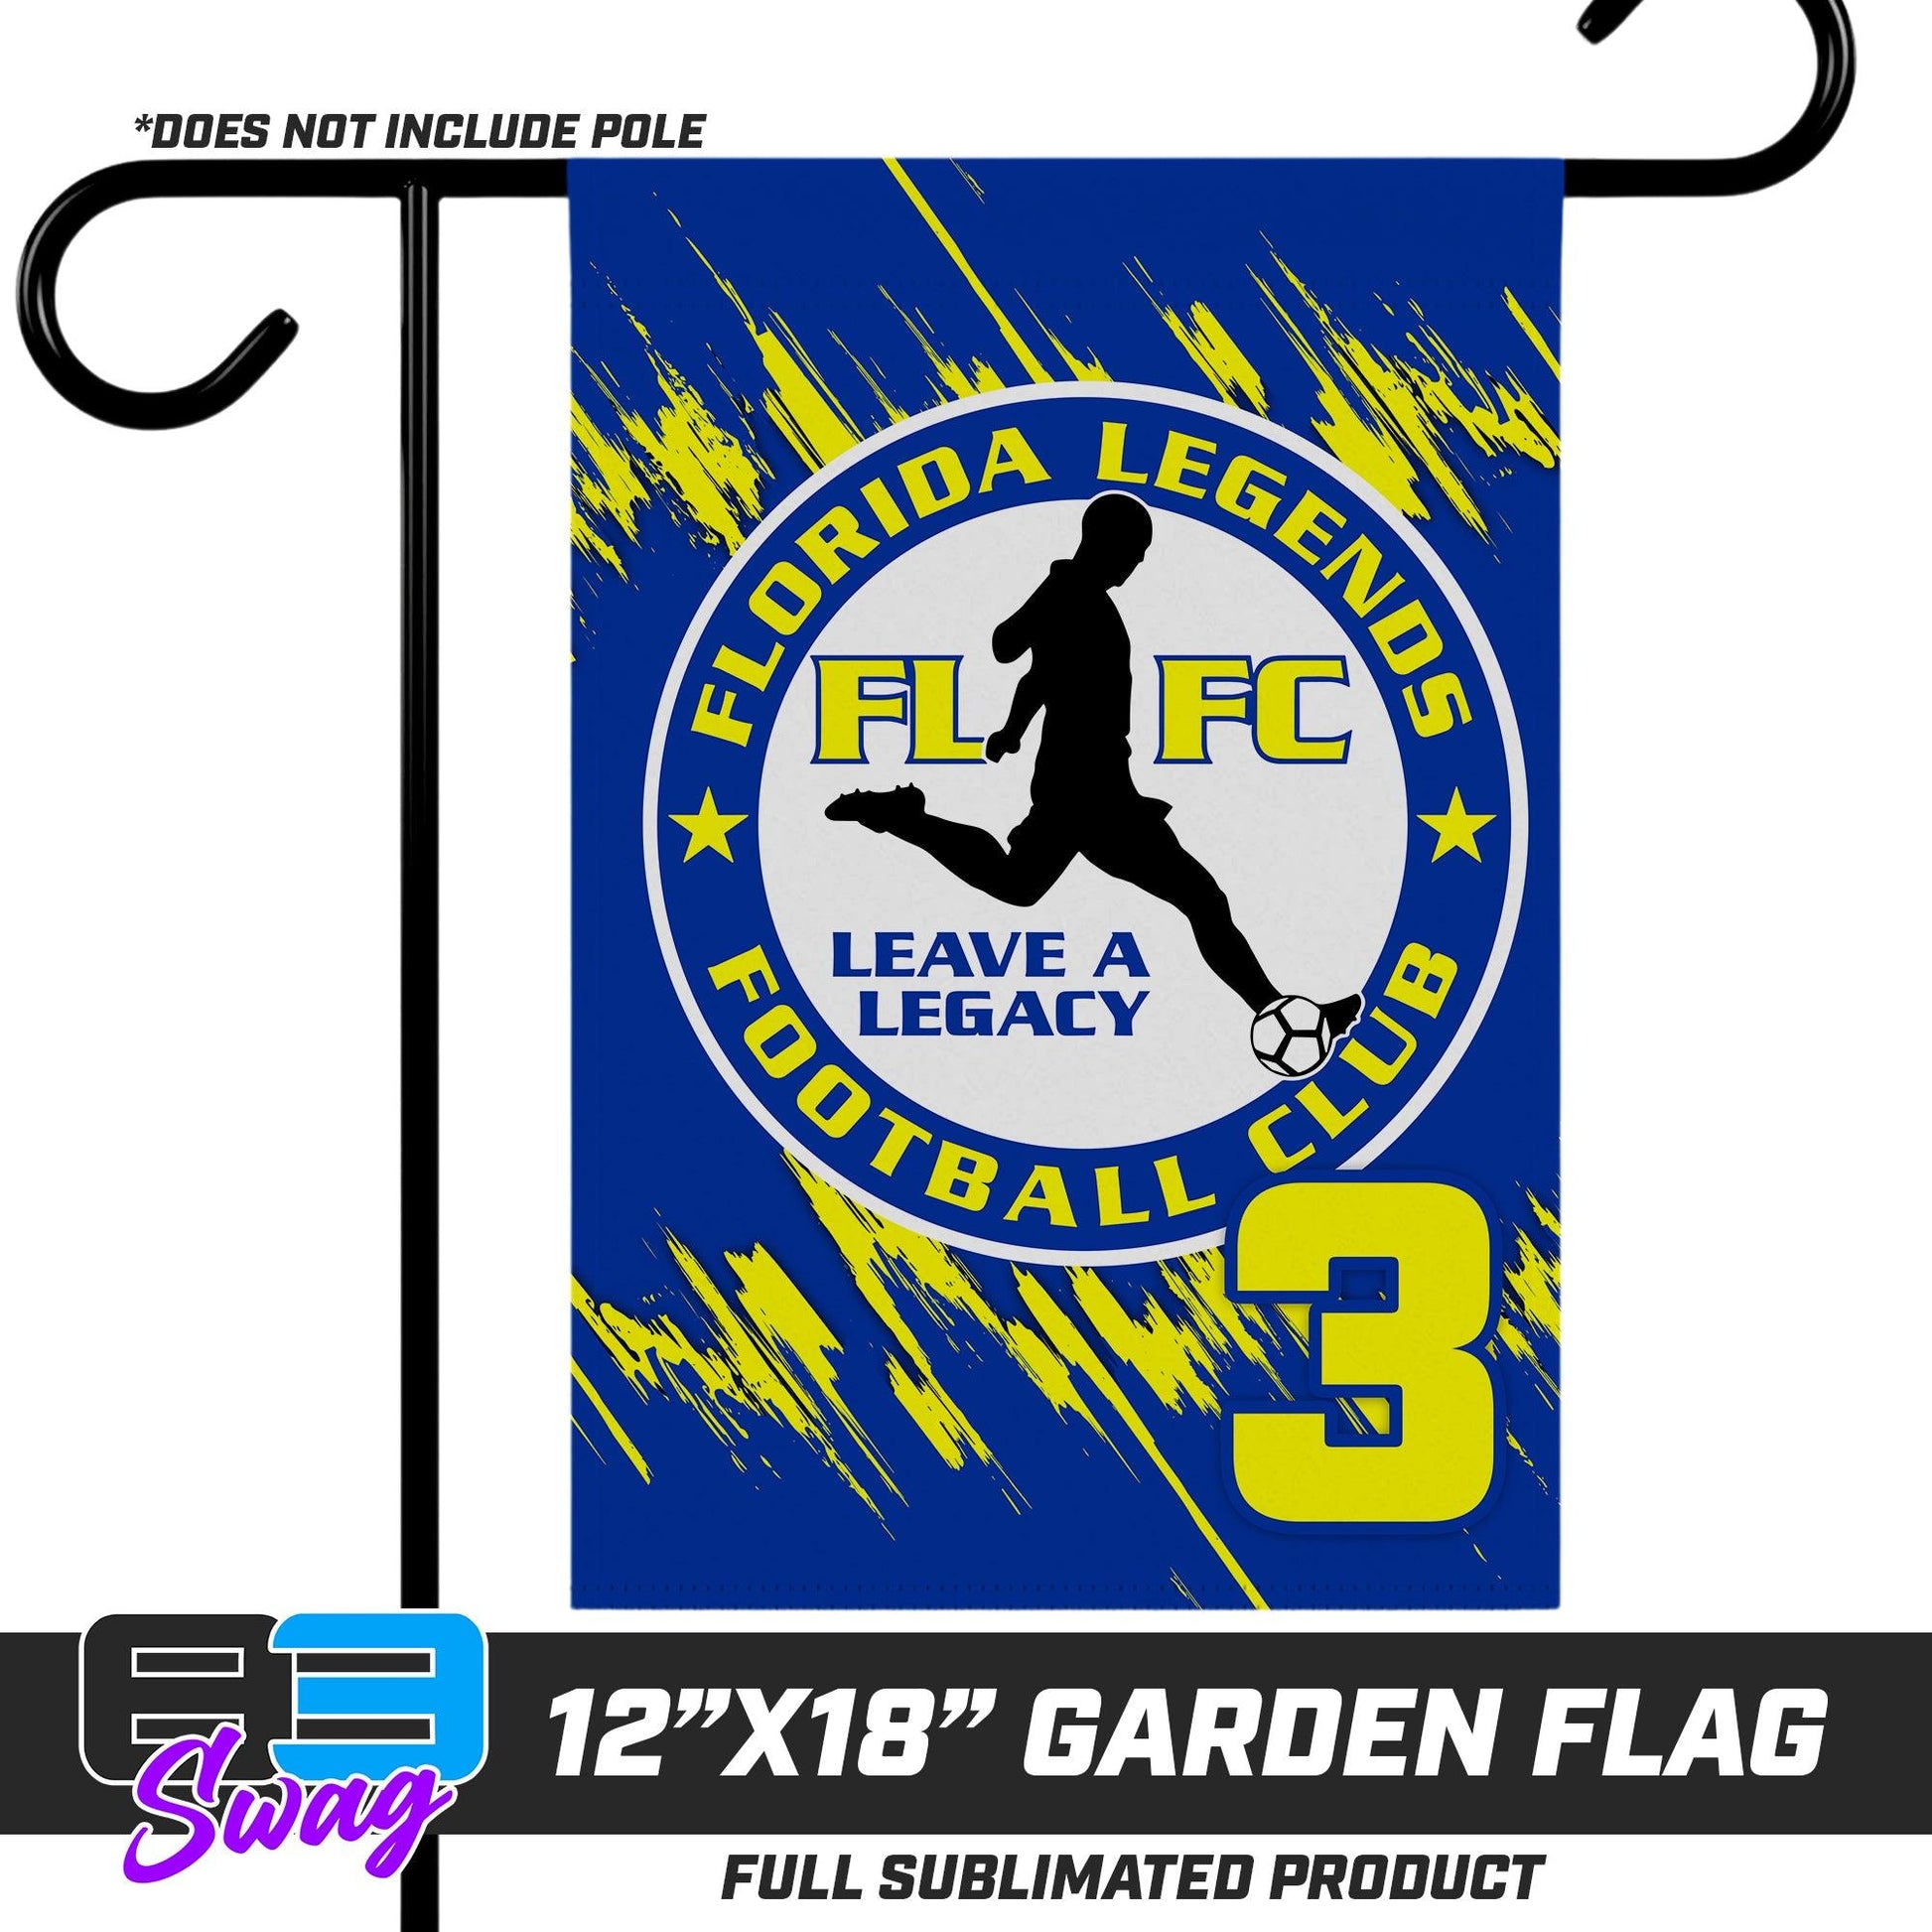 12"x18" Garden Flag - Florida Legends FC - 83Swag